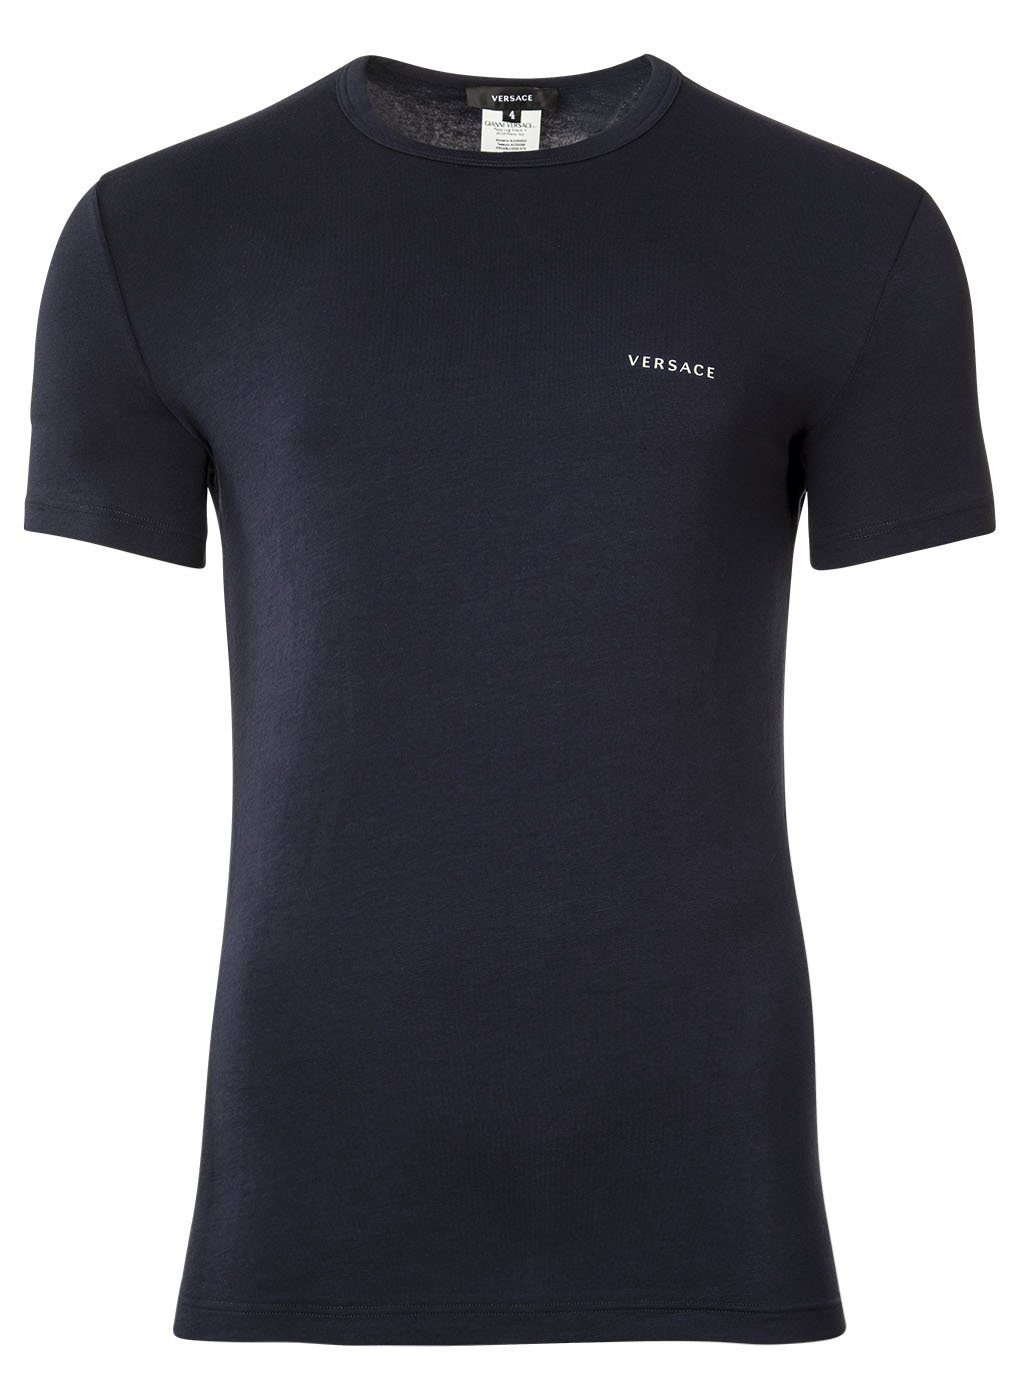 Versace Rundhals Herren T-Shirt Dunkelblau - T-Shirt, Pack Unterhemd, 2er